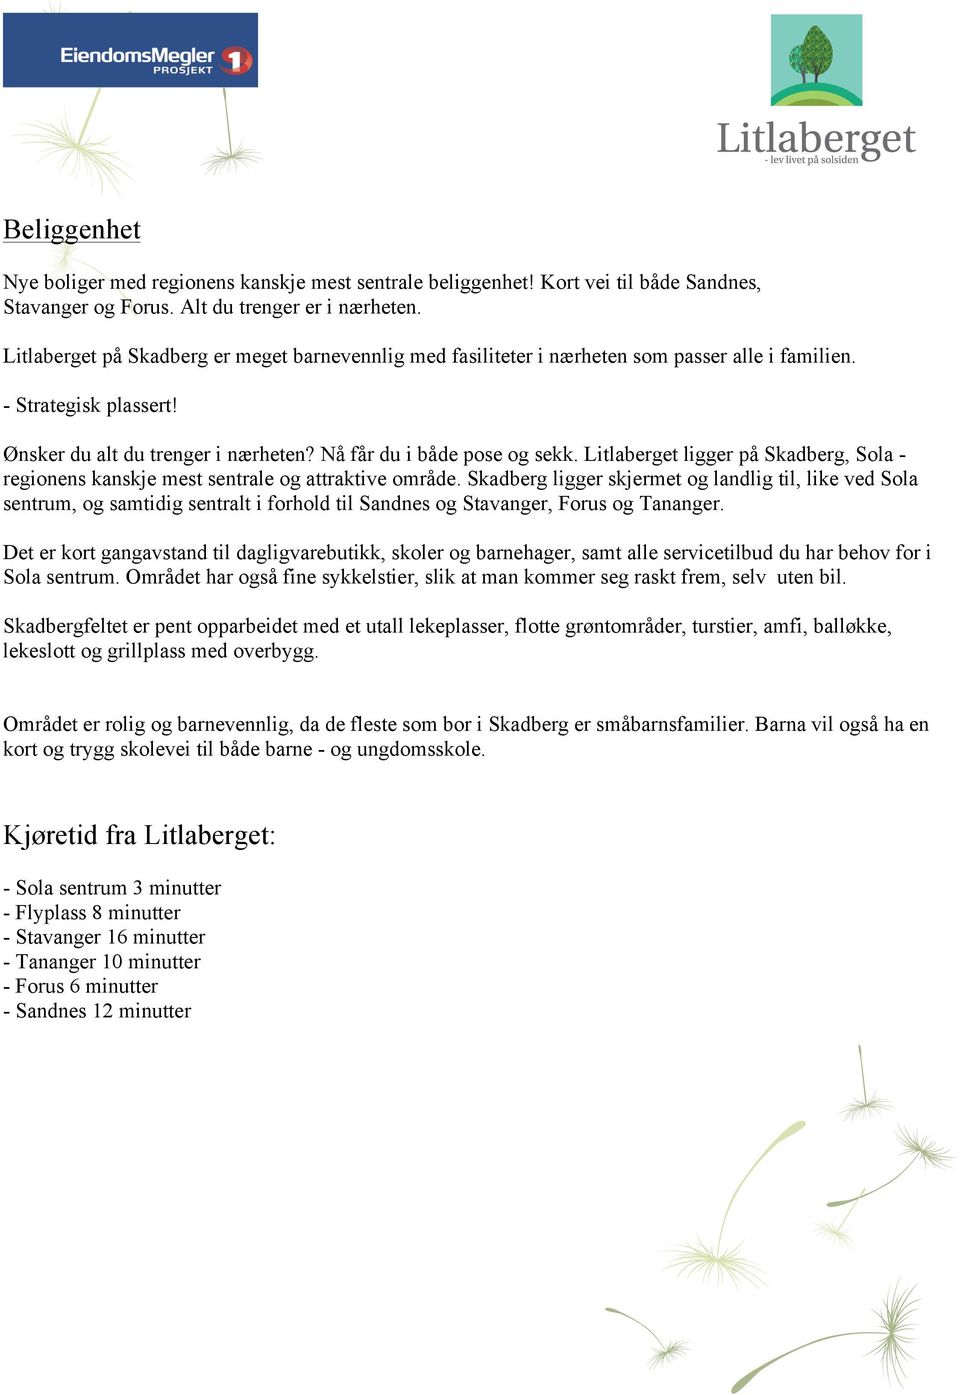 Litlaberget ligger på Skadberg, Sola - regionens kanskje mest sentrale og attraktive område.